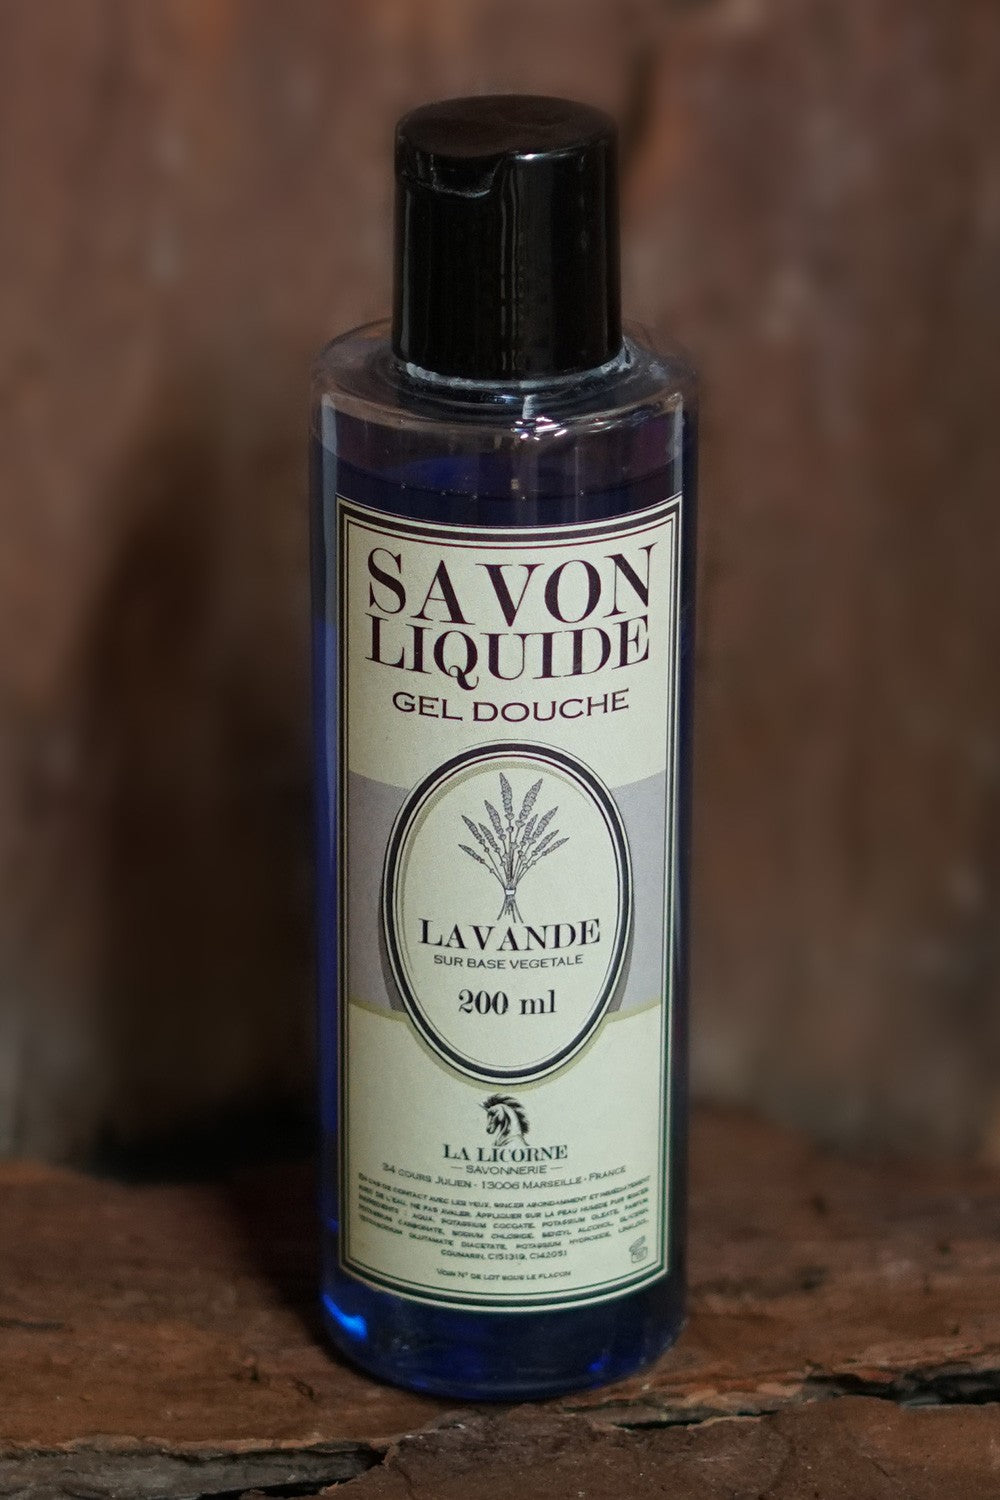 Liquid soap/shower gel - 200ml Lavande